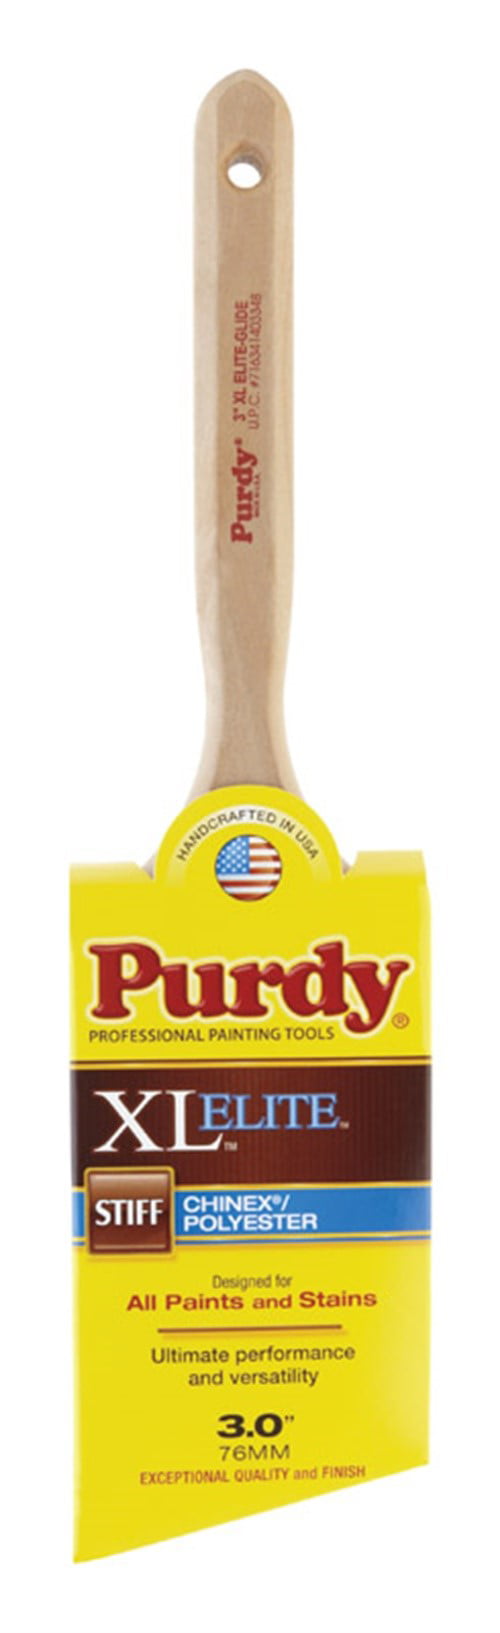 Purdy 2.5 XL Glide Polyester-Nylon Blend Paint Brush 2.5” Medium Stiff 